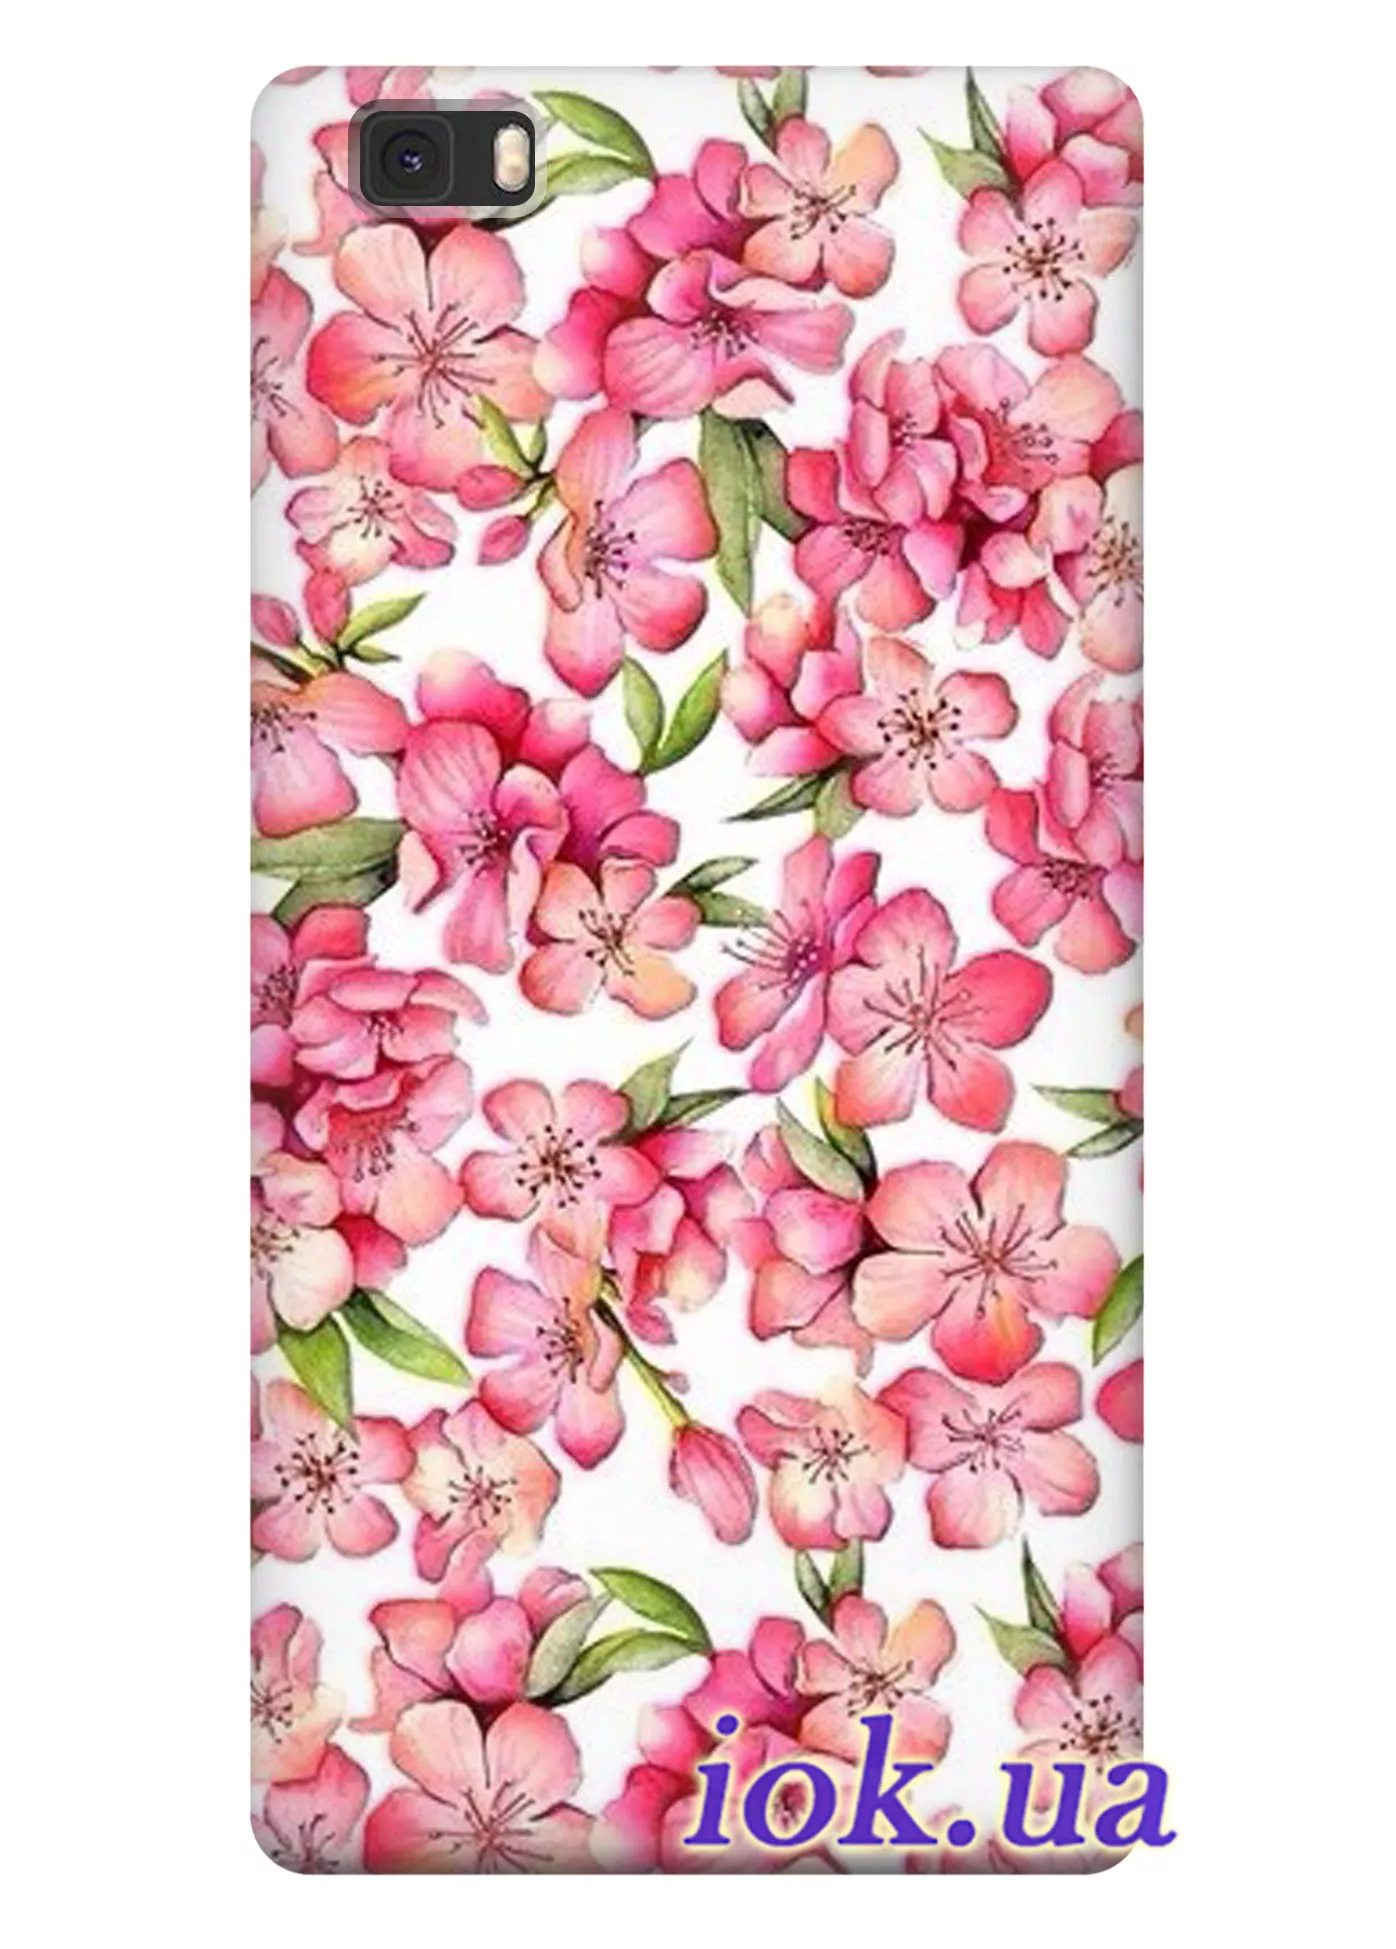 Чехол для Huawei P8 Lite - Чудные цветочки